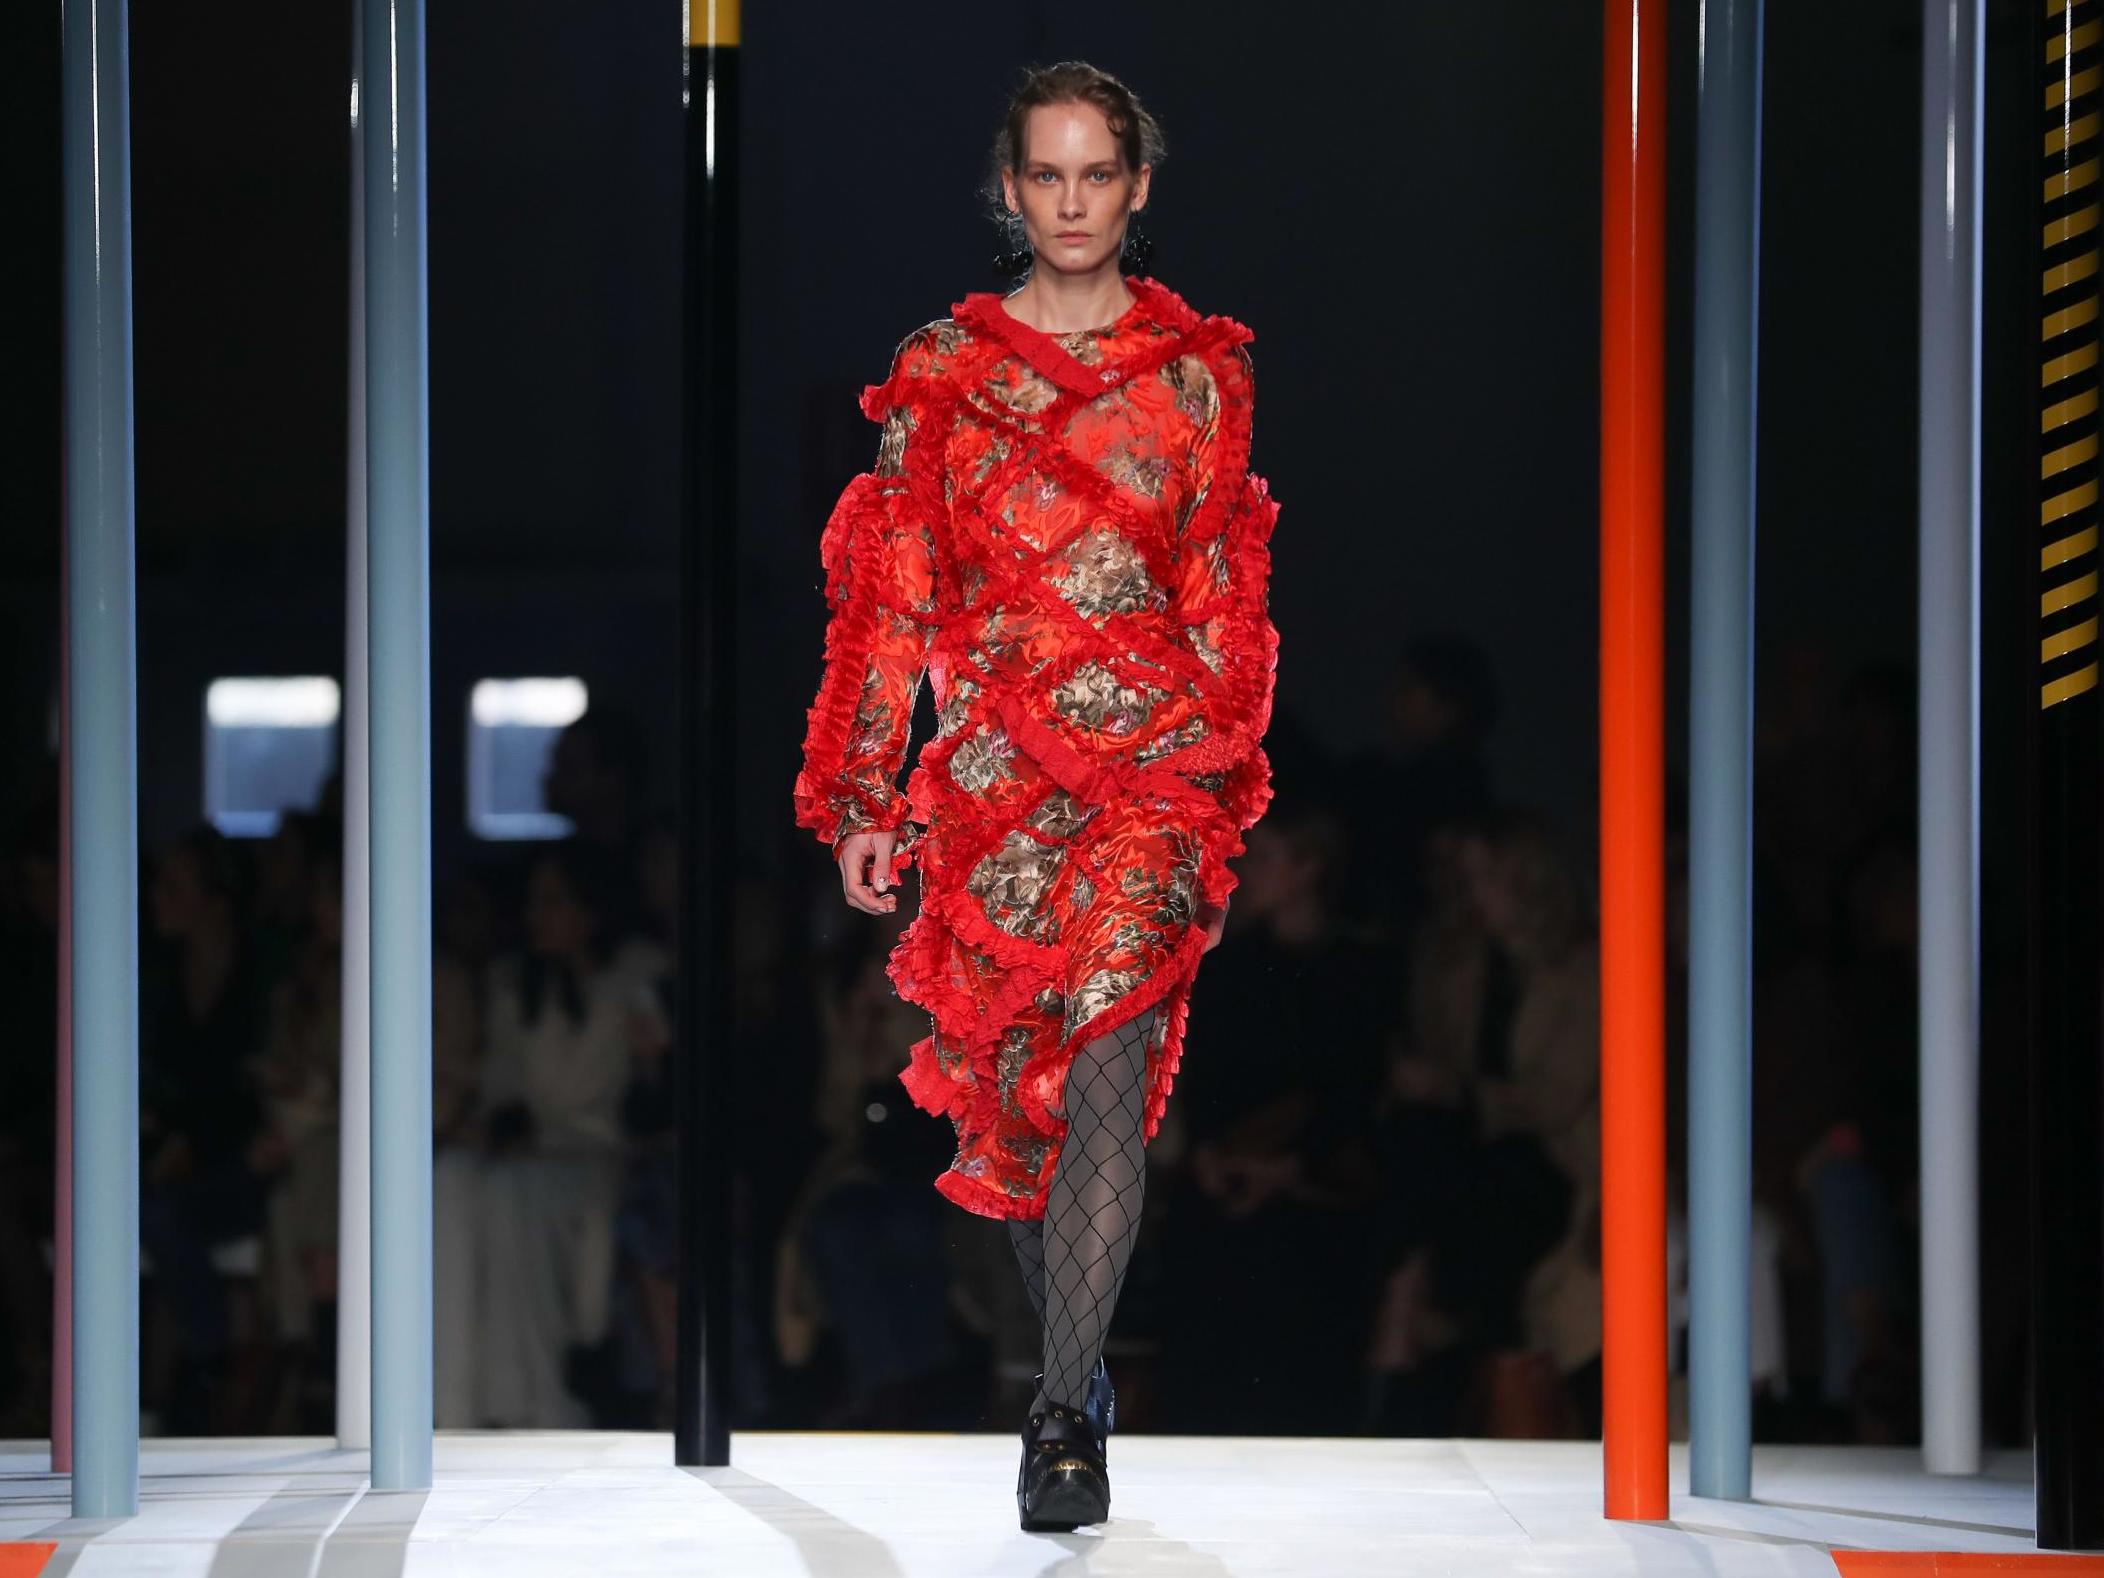 Preen By Thornton Bregazzi AW19 catwalk at London Fashion Week, February 2019